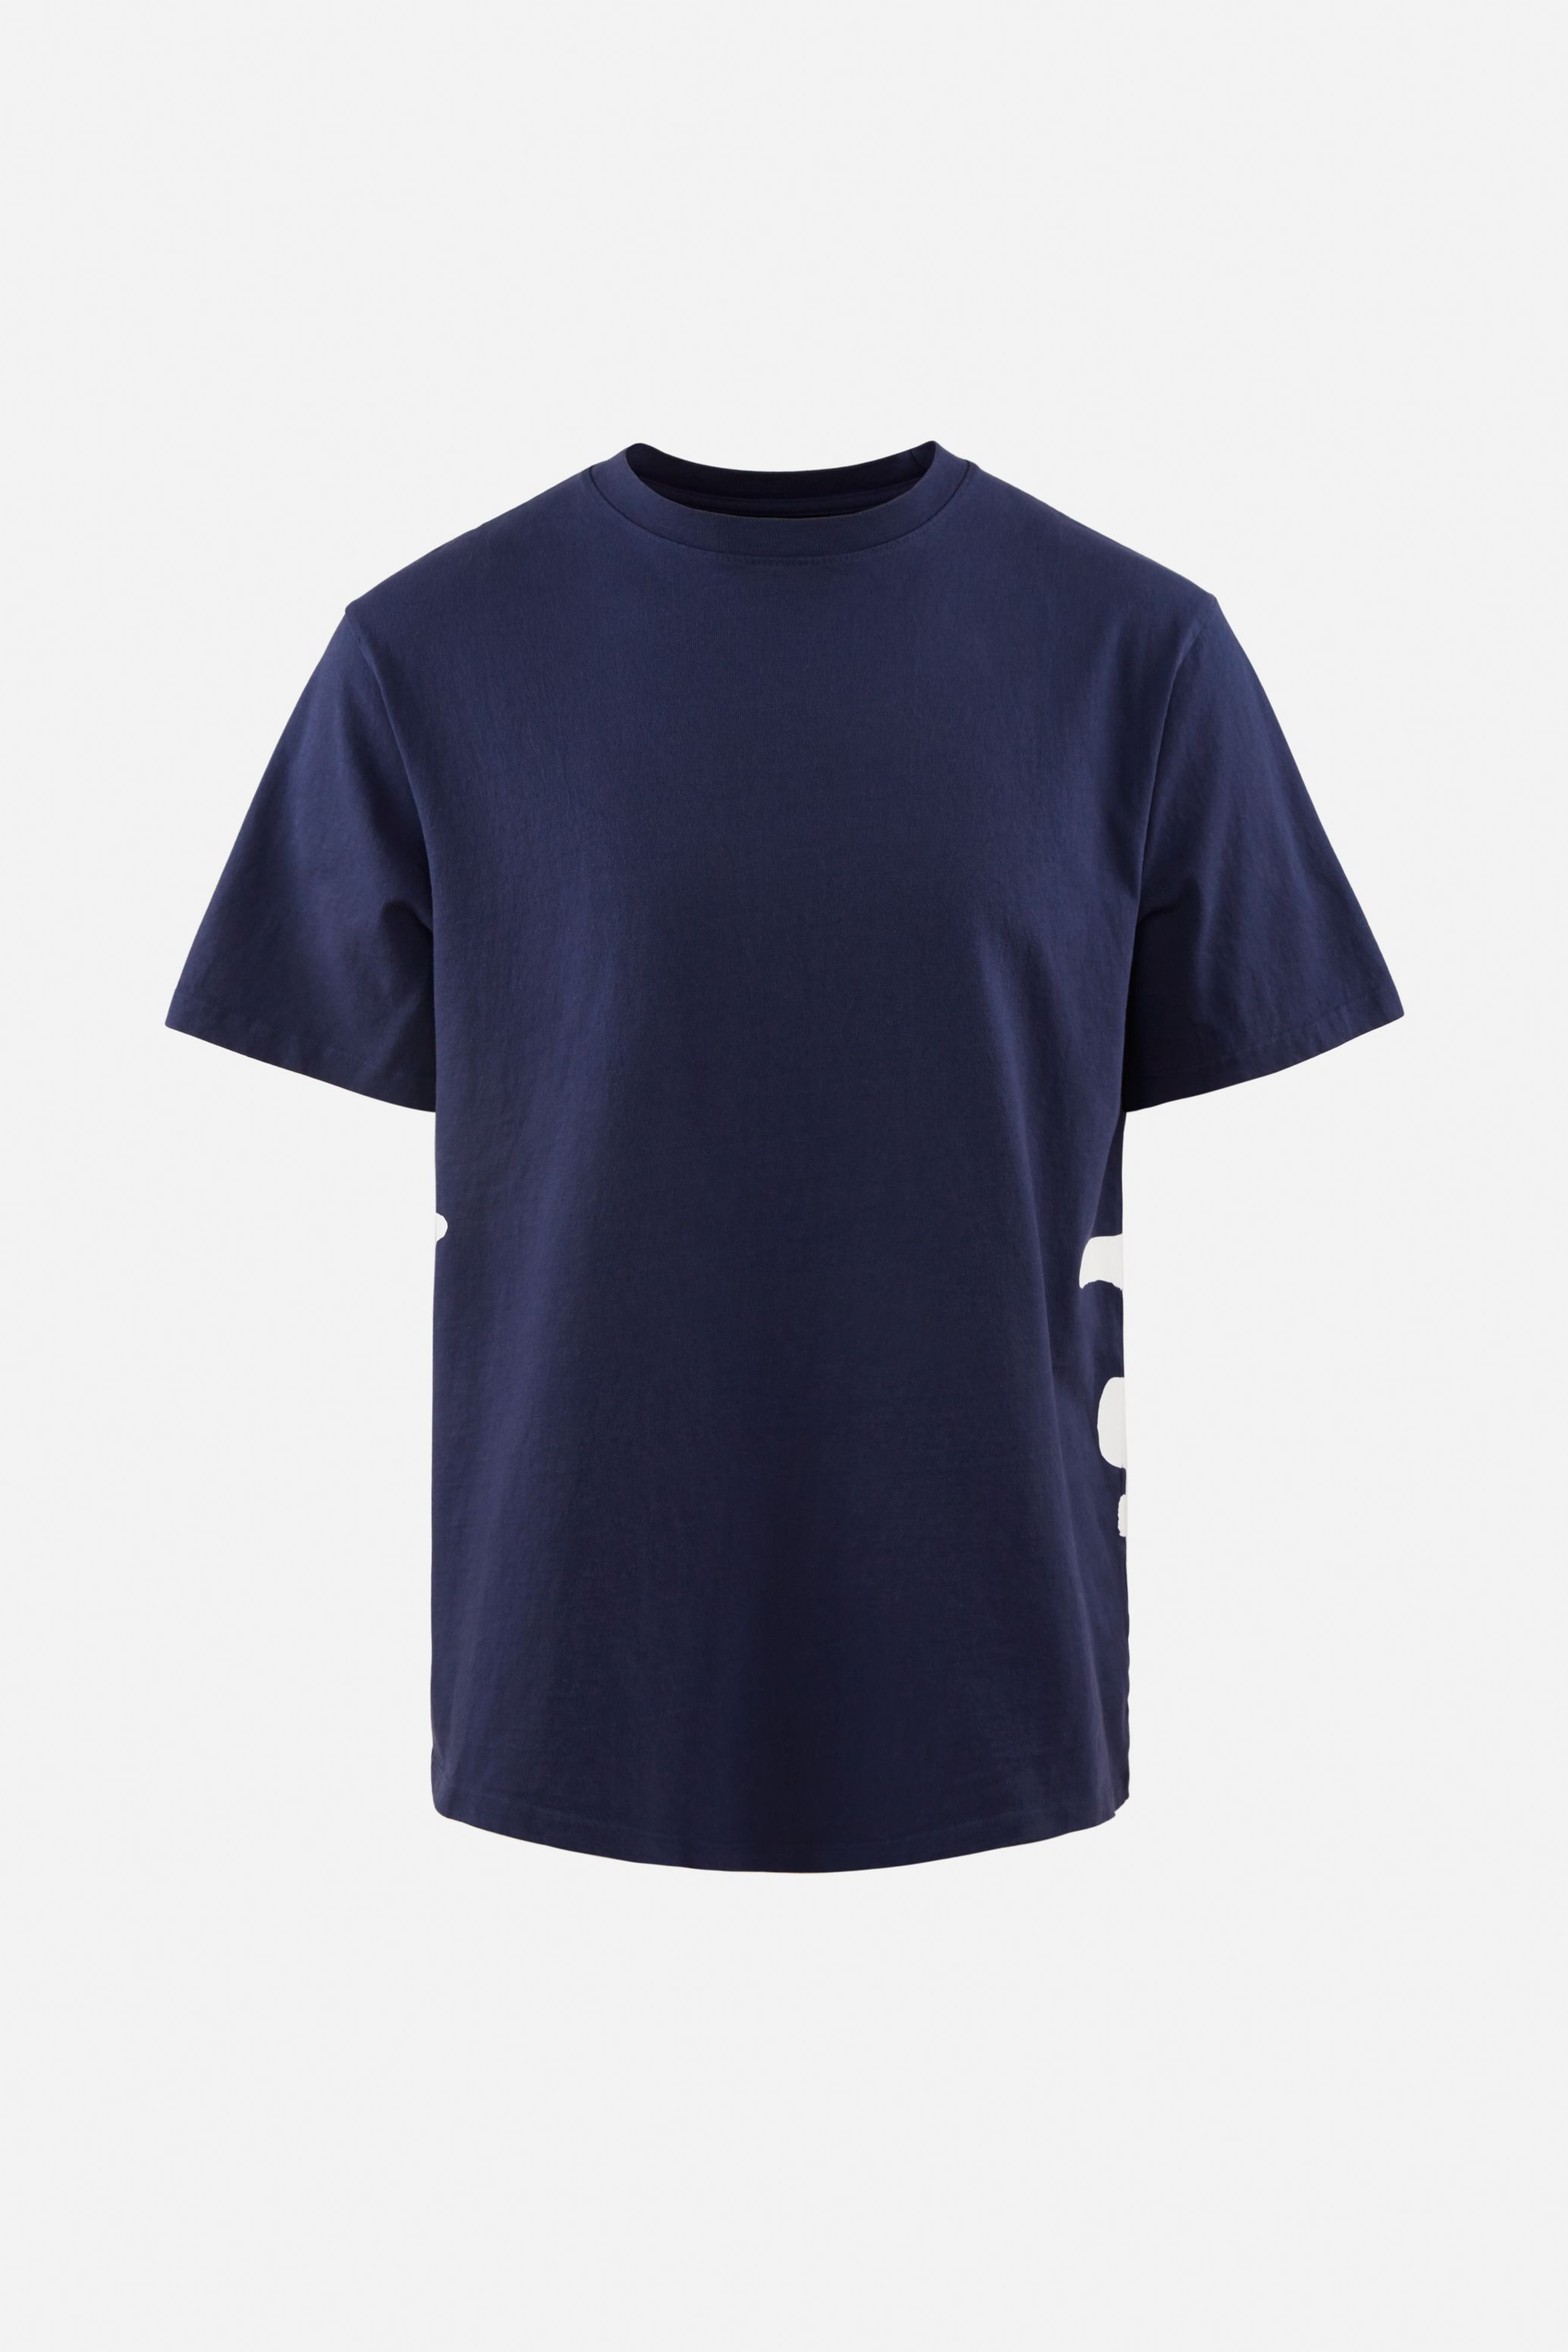 Karuna Short Sleeve T-Shirt, Navy Meditation